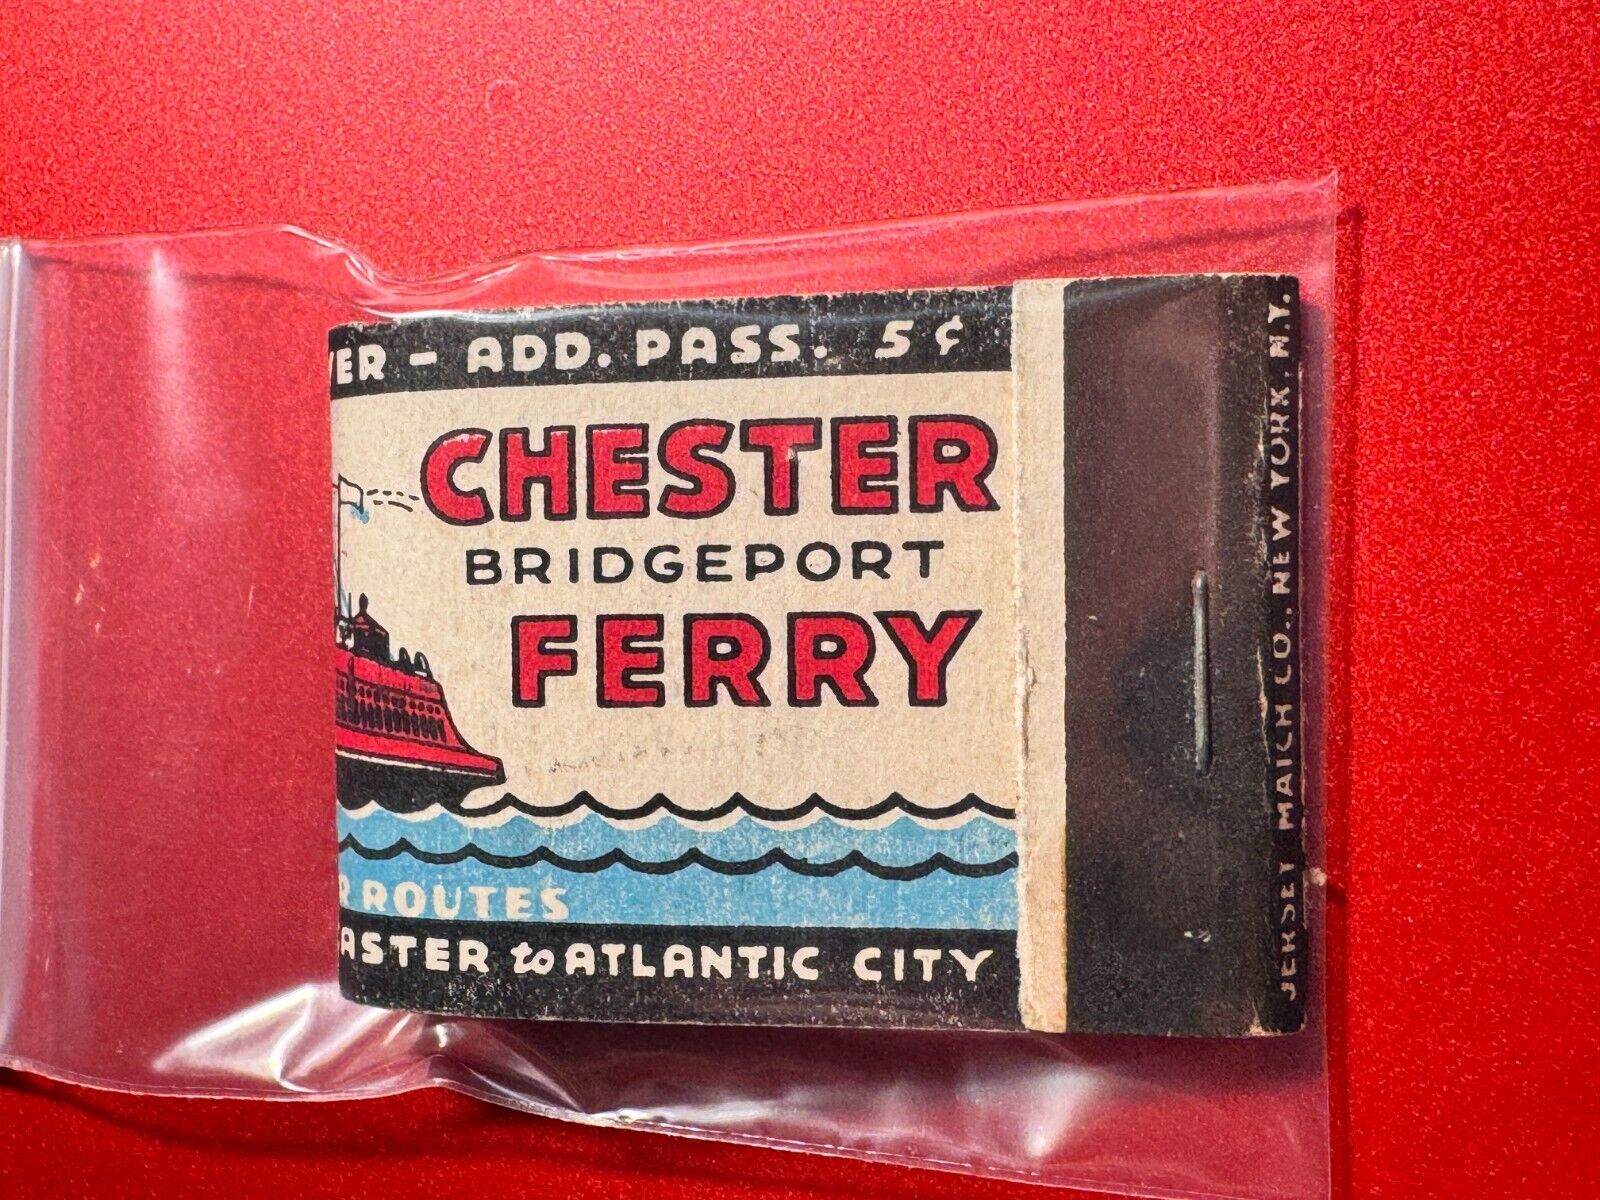 MATCHBOOK - CHESTER BRIDGEPORT FERRY - NY TO ATLANTIC CITY - UNSTRUCK